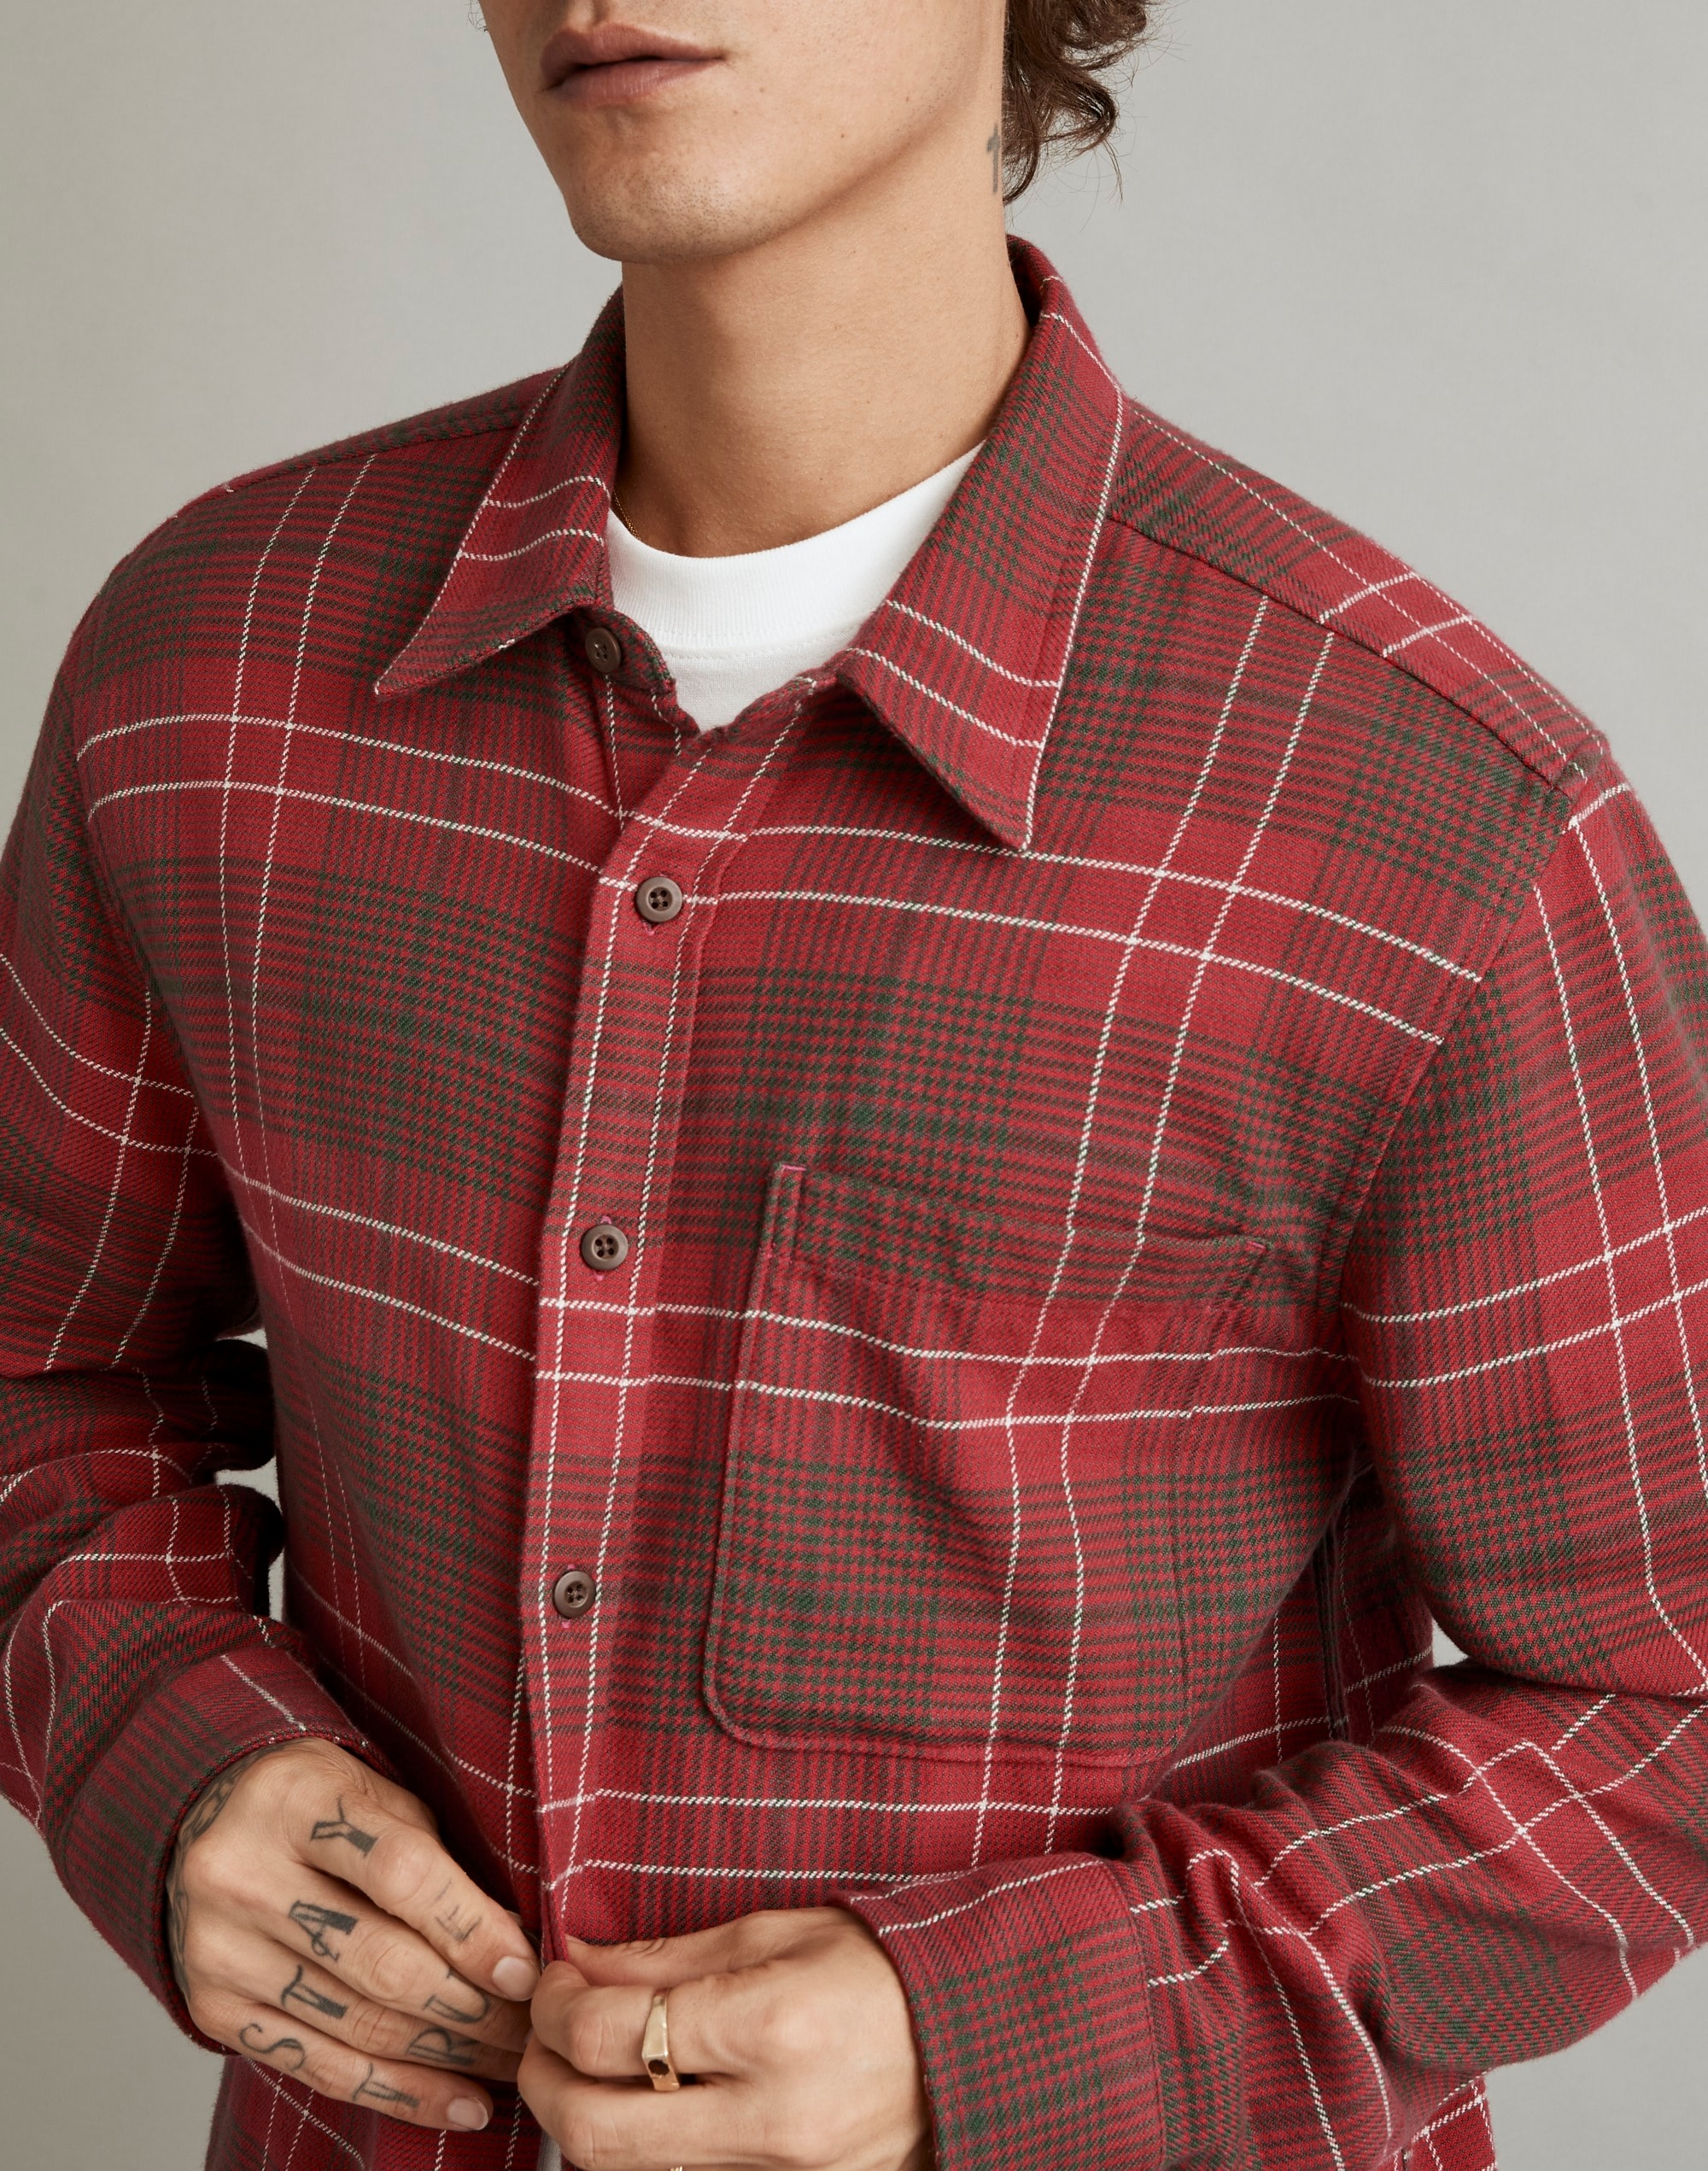 Sunday Flannel Easy Long-Sleeve Shirt